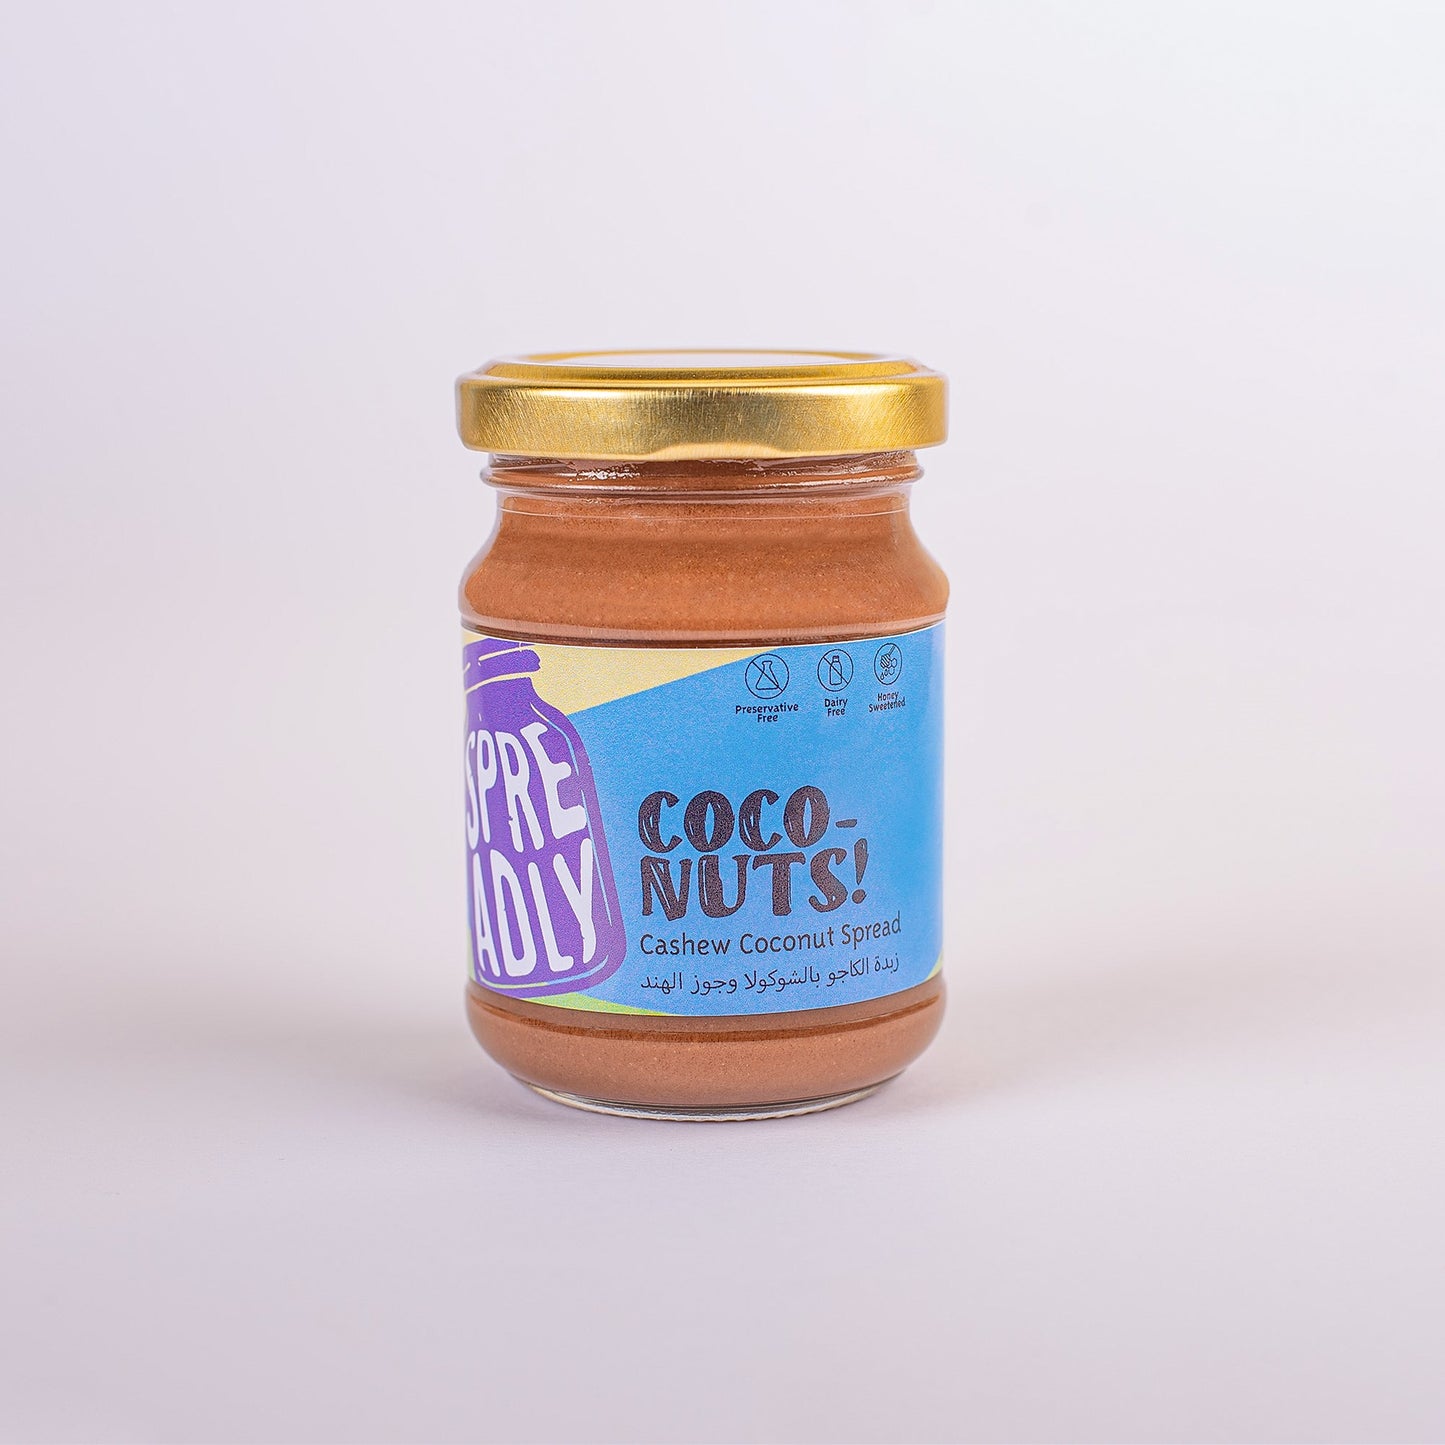 Coco-Nut! Chocolate Cashew Coconut Spread